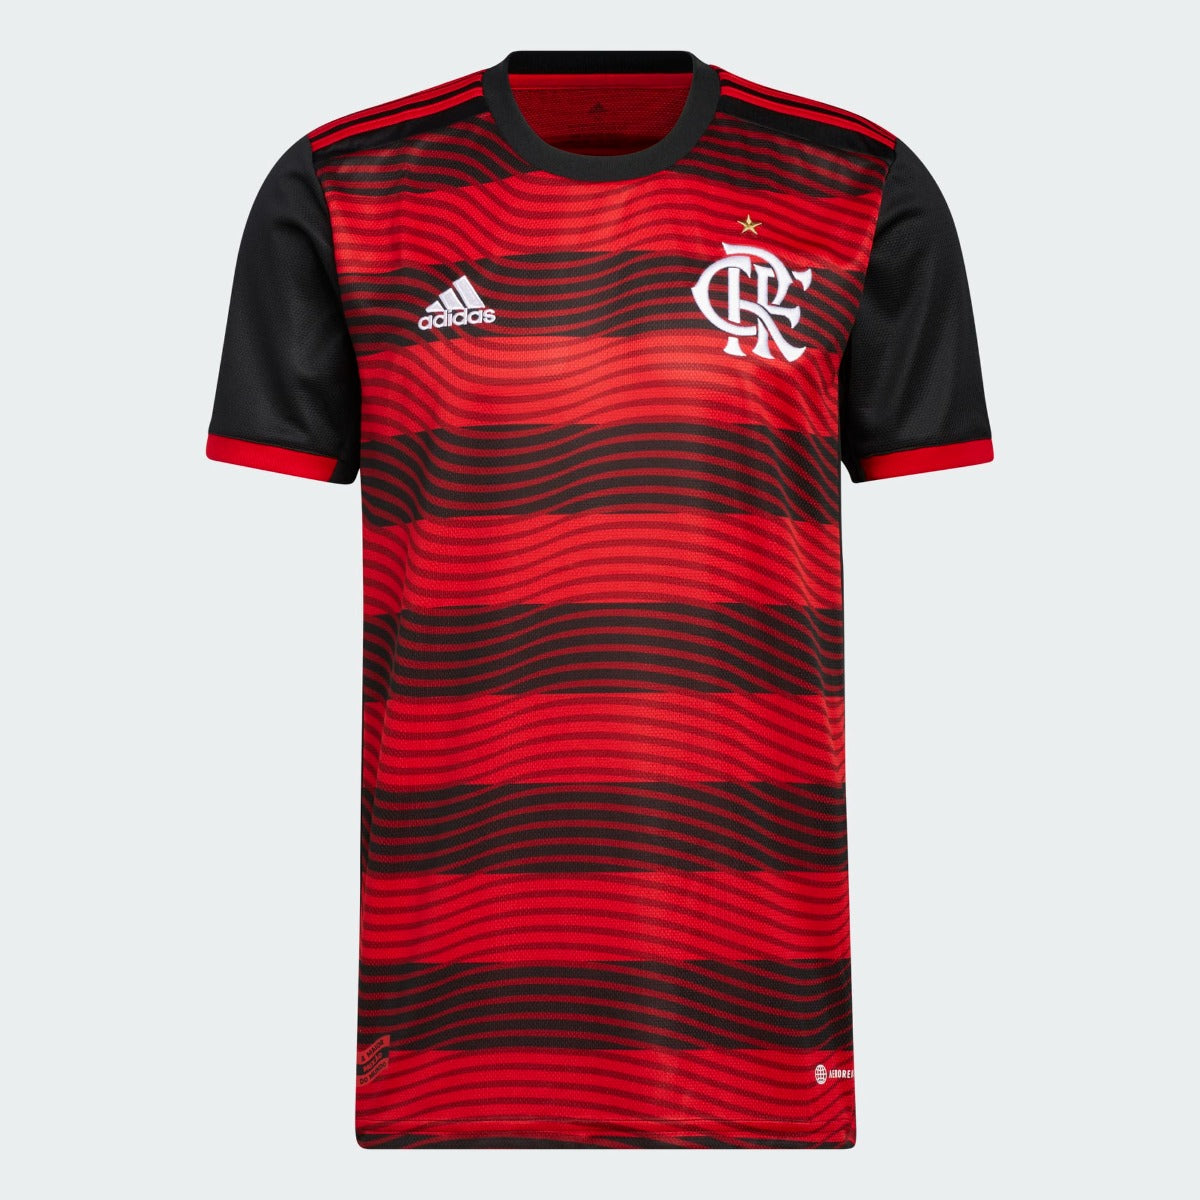 Adidas, Maglia adidas 2022 CR Flamengo - Rosso-Nero